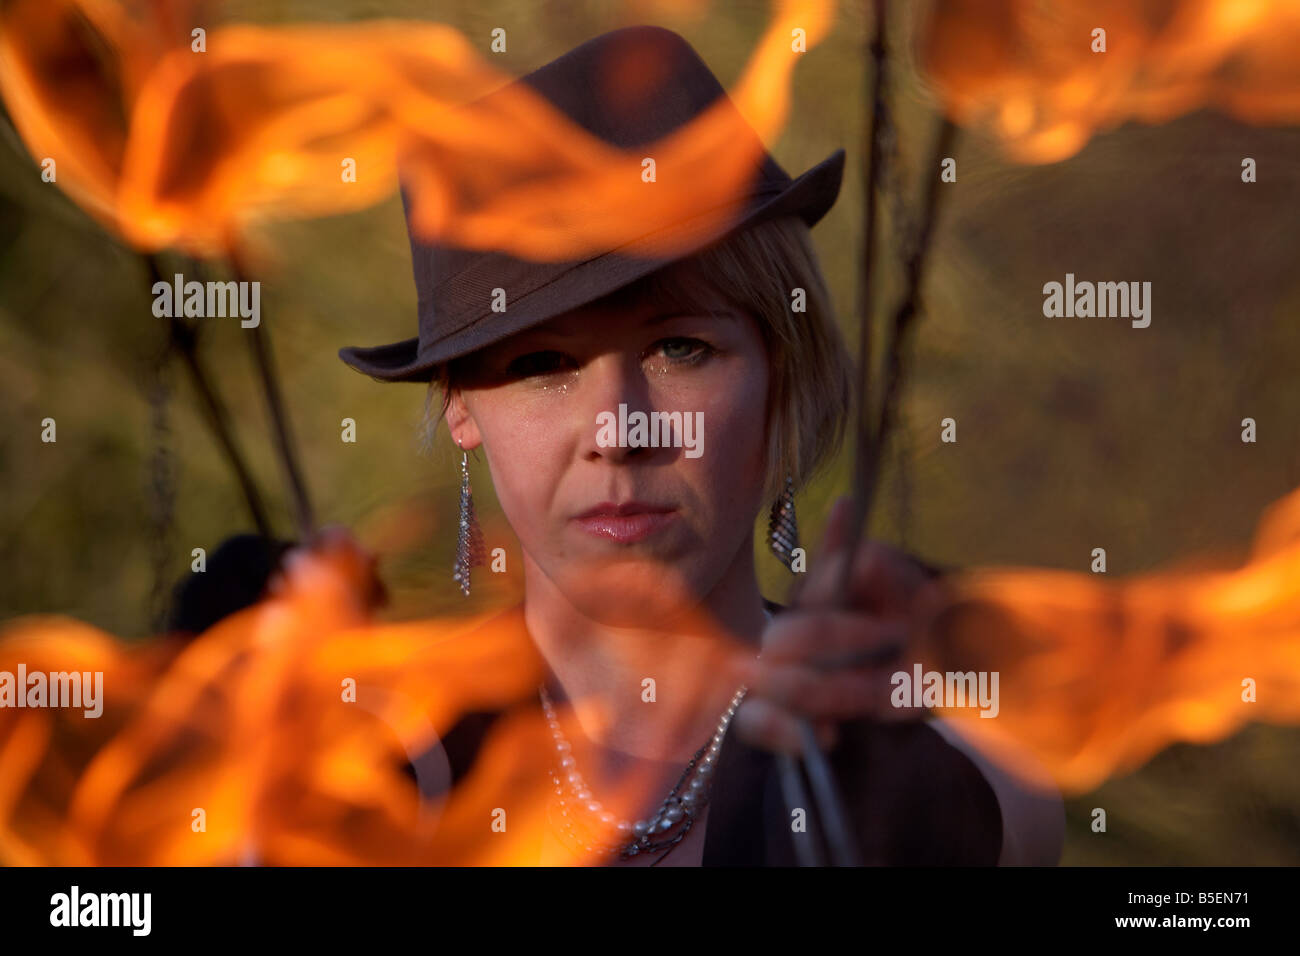 Femmina firepoise fire performance di danza artista indossando hat azienda ventilatori antincendio Foto Stock